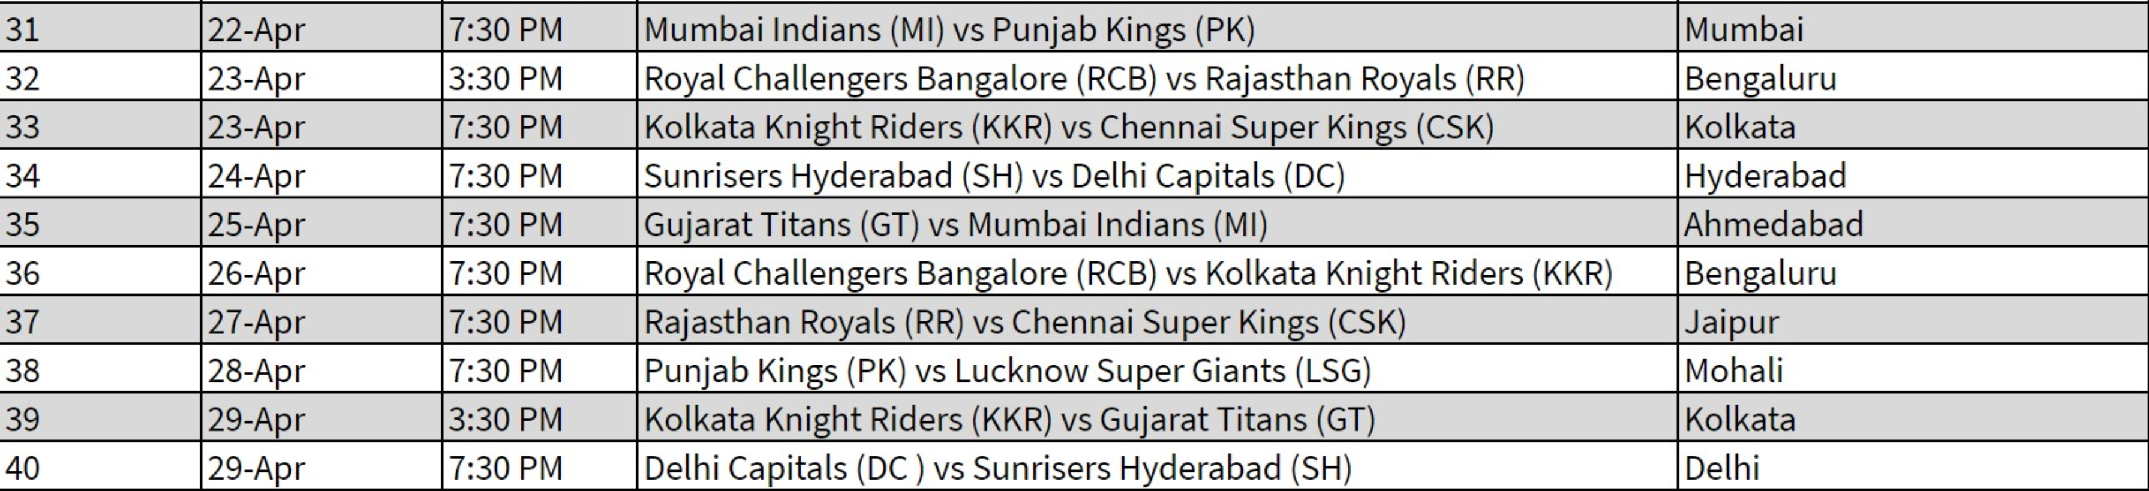 calendario completo de IPL 2023